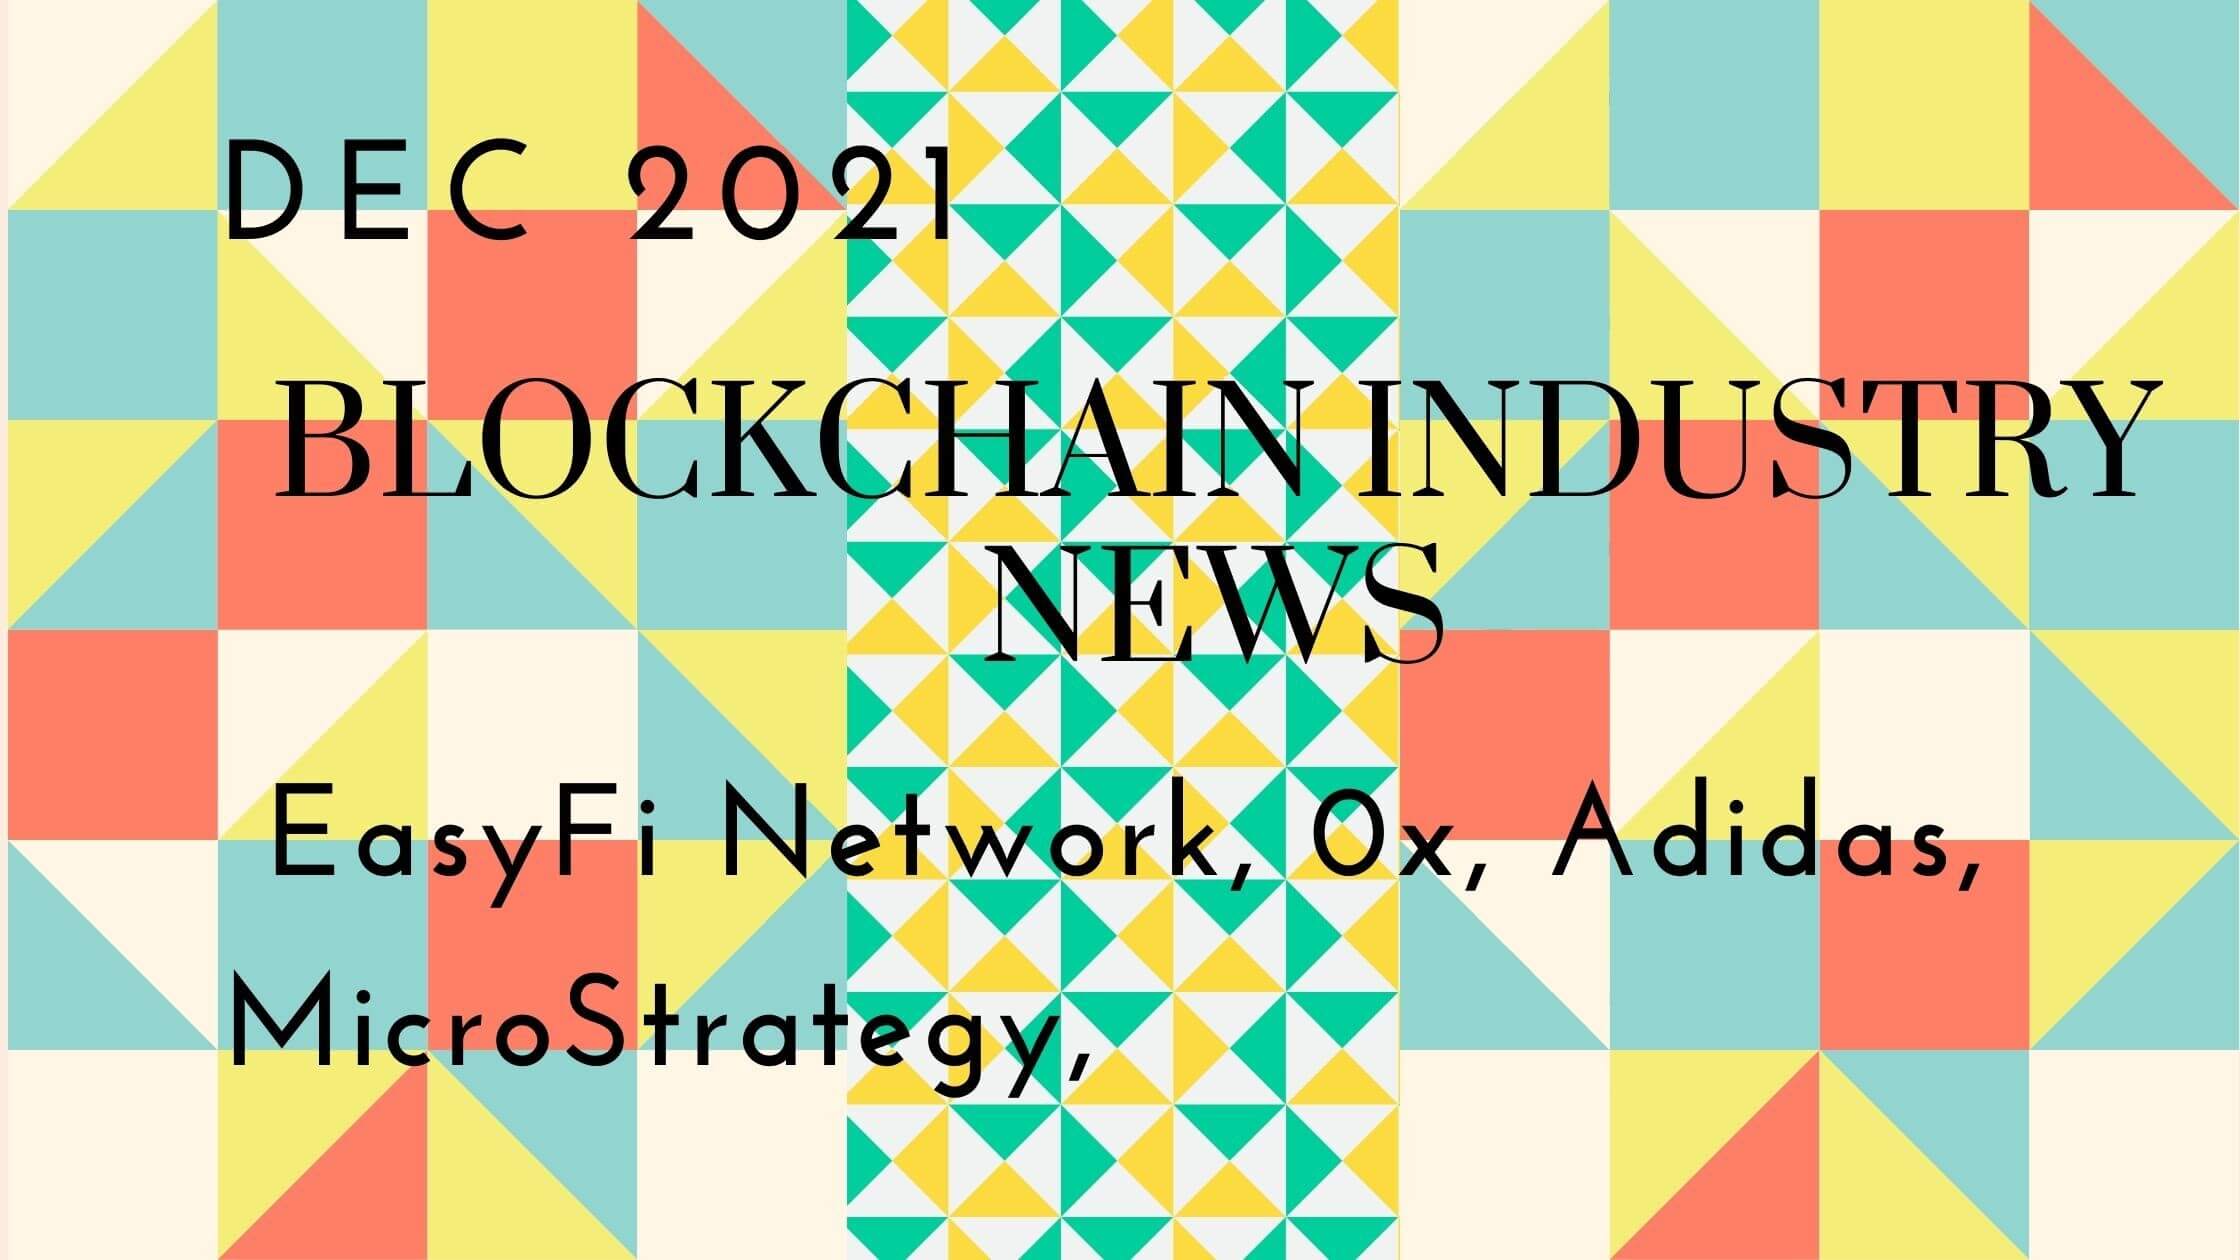 Blockchain industry news